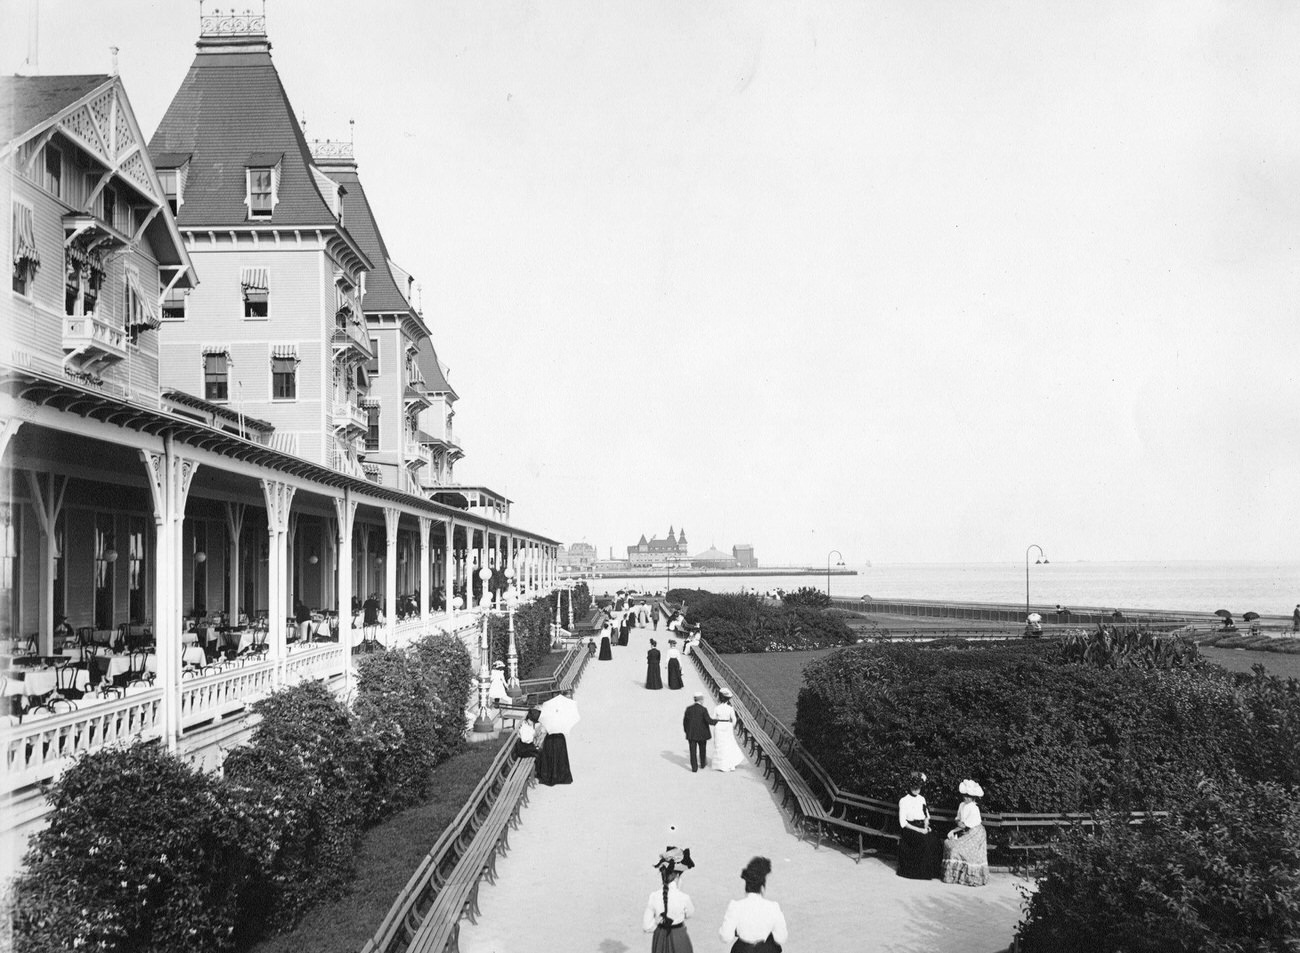 Sheepshead Bay, Brooklyn, 1896